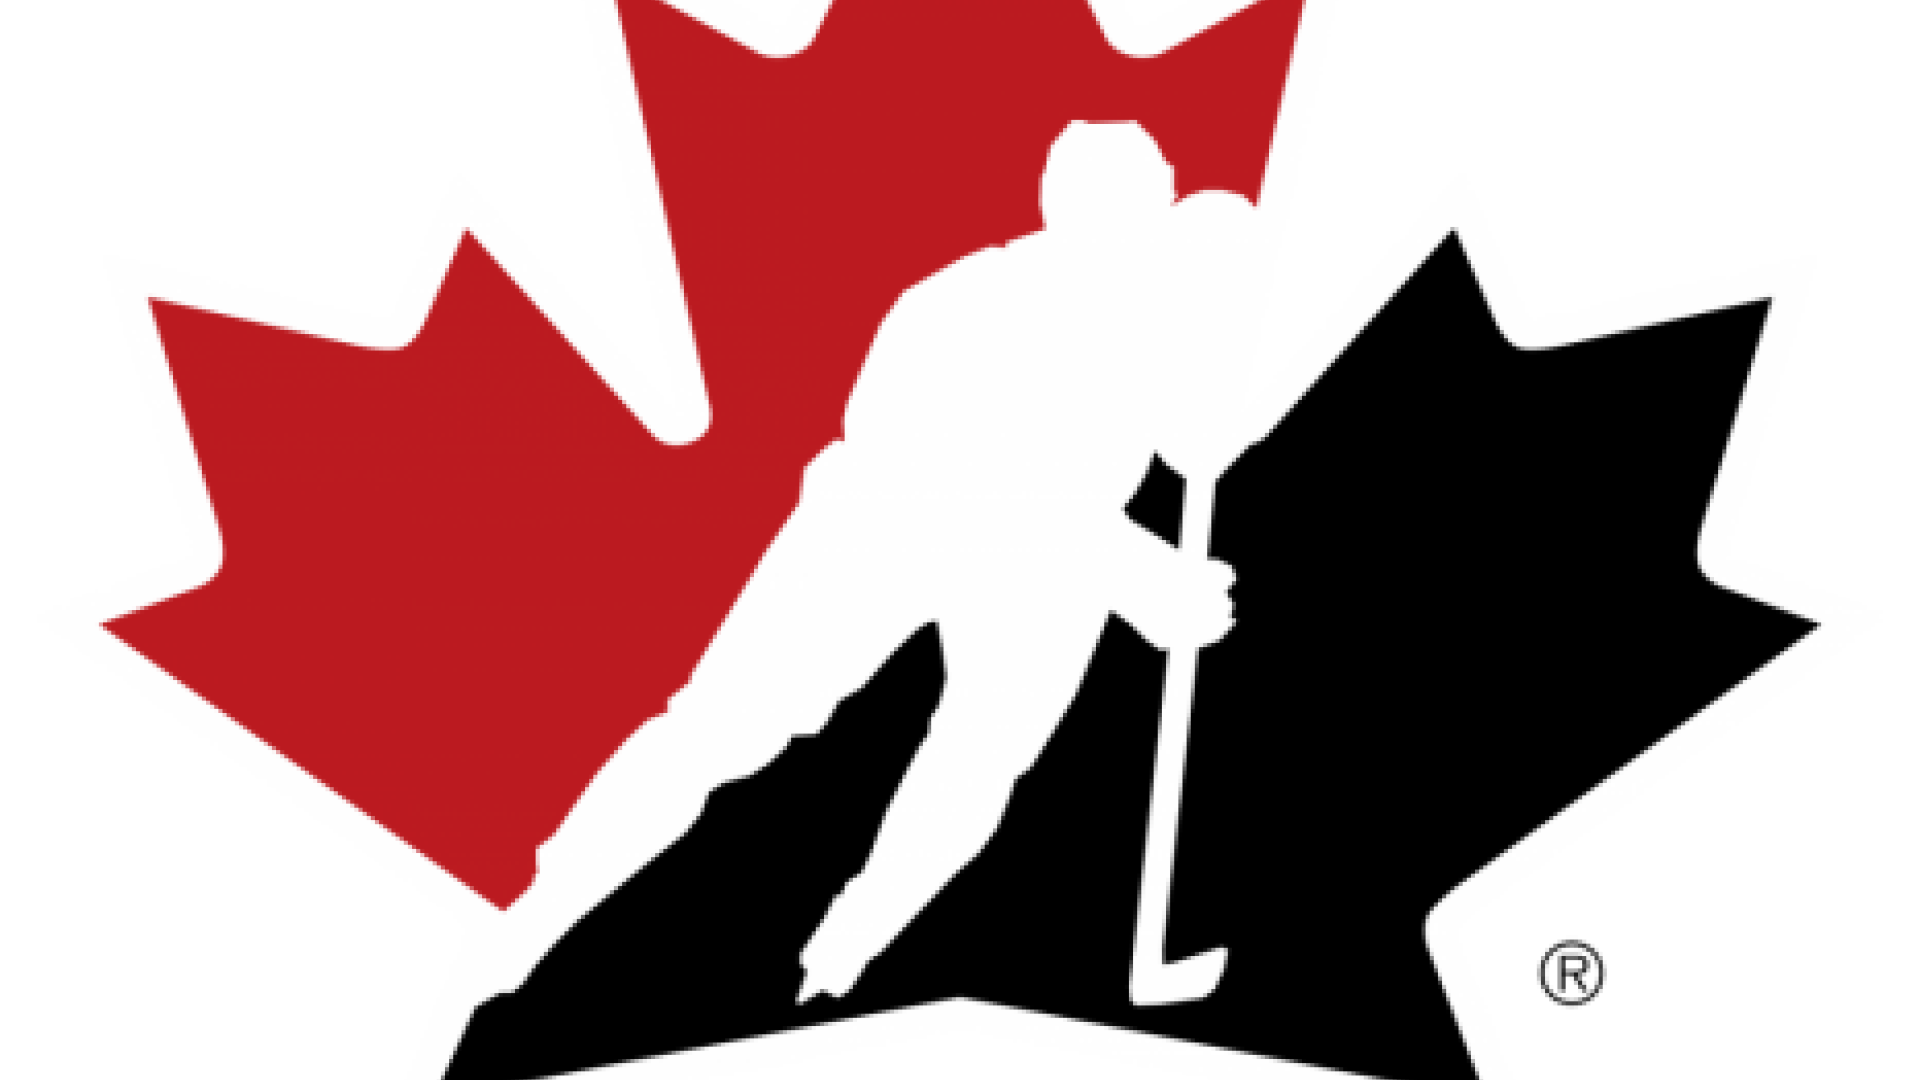 Canadian national hockey team logo.